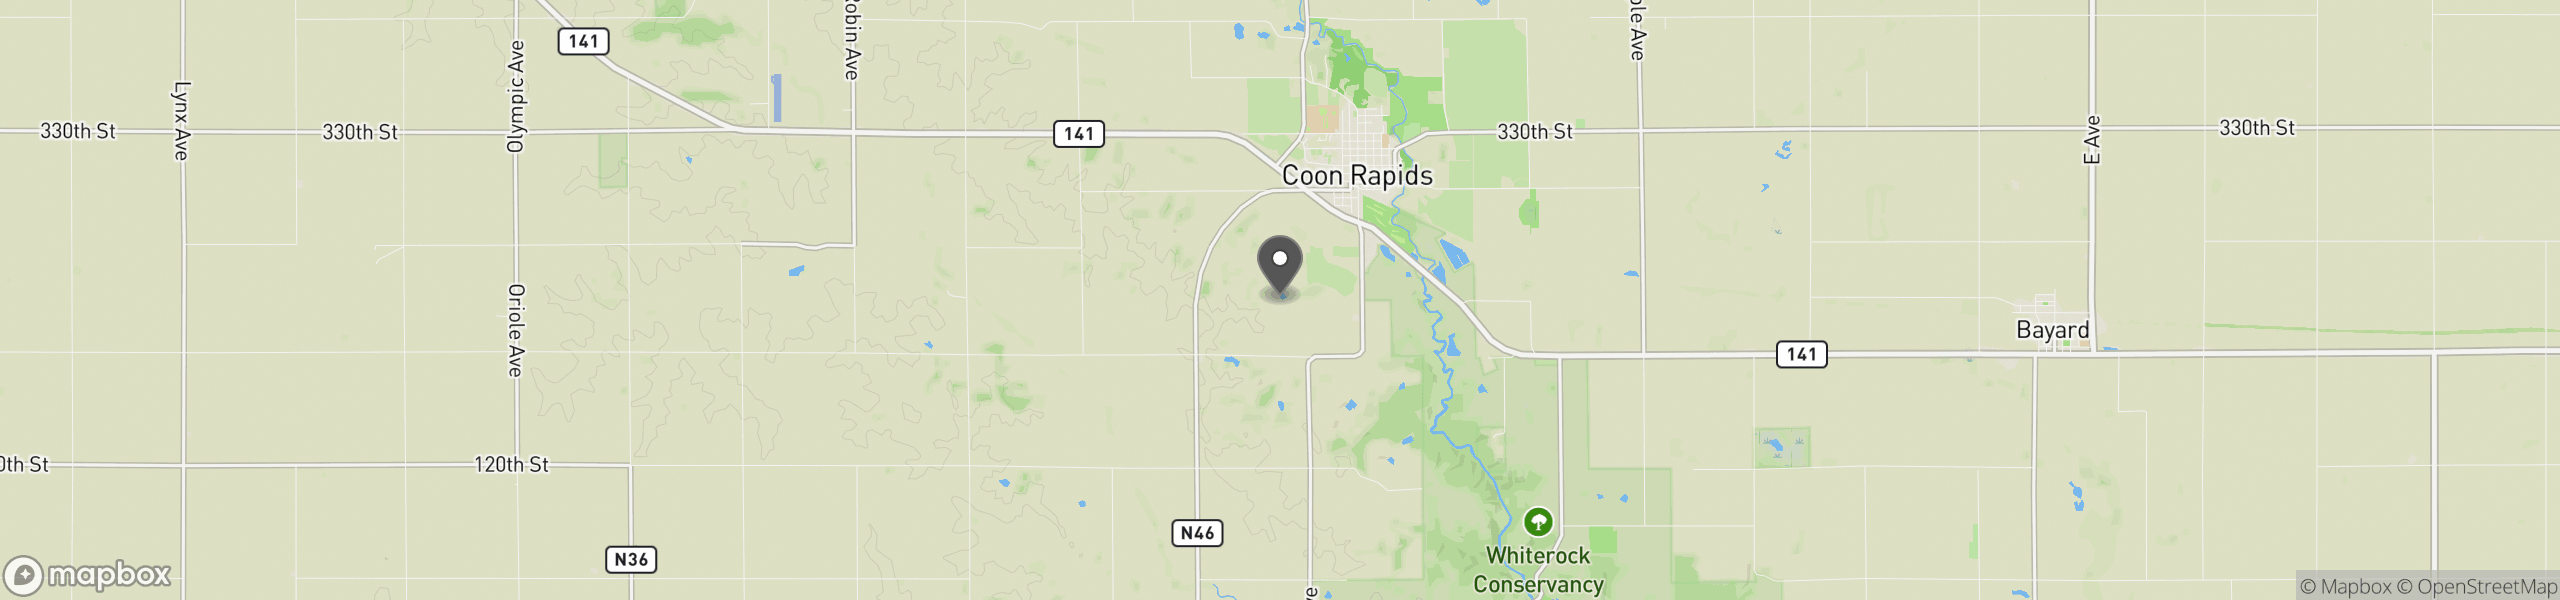 Coon Rapids, IA 50058